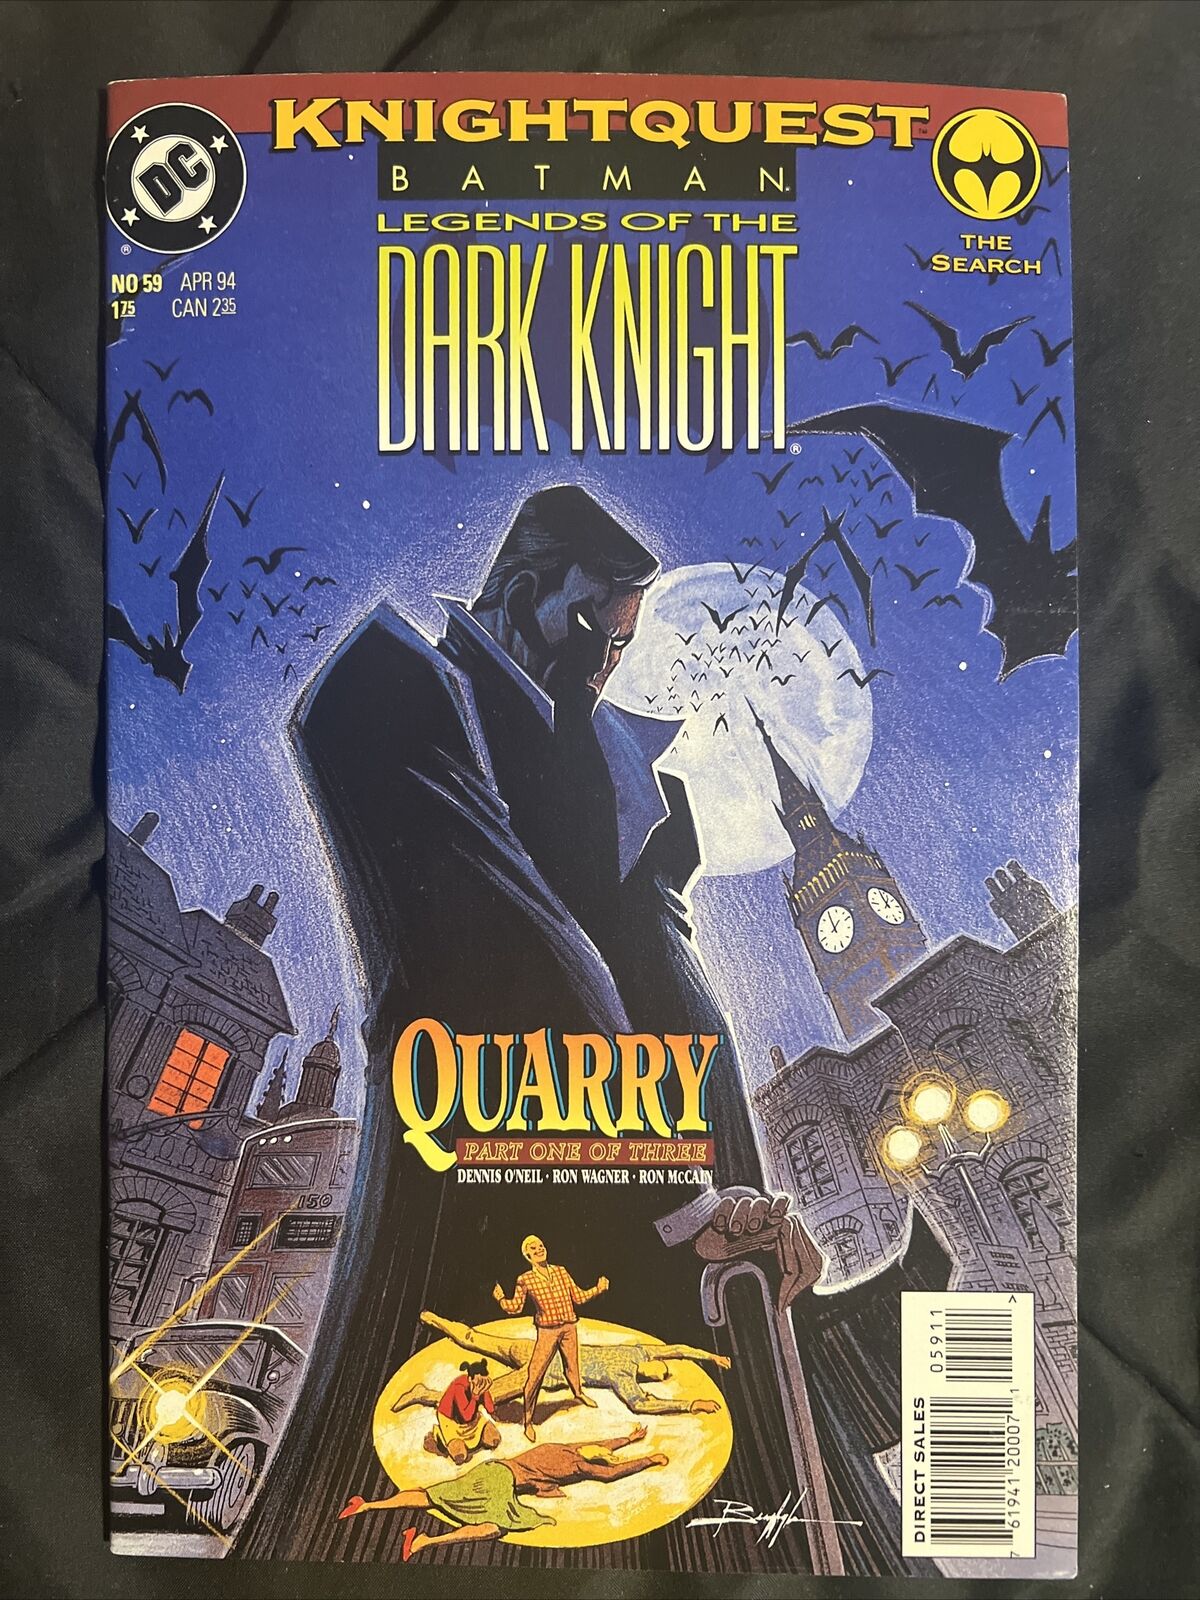 BATMAN: LEGENDS OF THE DARK KNIGHT #59 HIGH GRADE DC COMIC BOOK